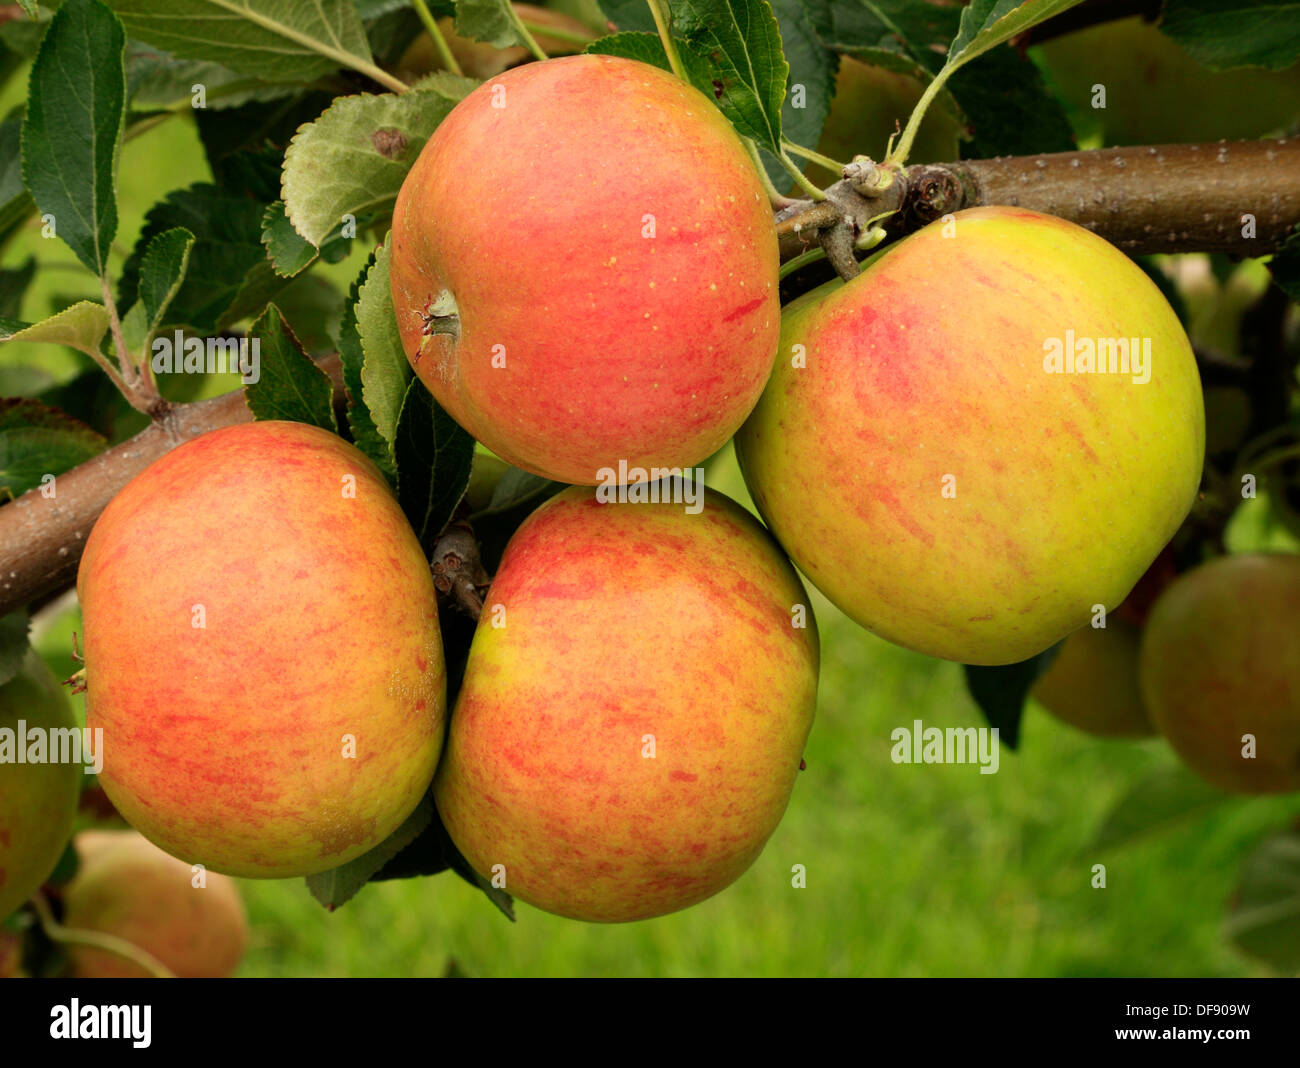 Apple, 'Lynn's Pippin', variety growing on tree, fruit apples England UK Stock Photo